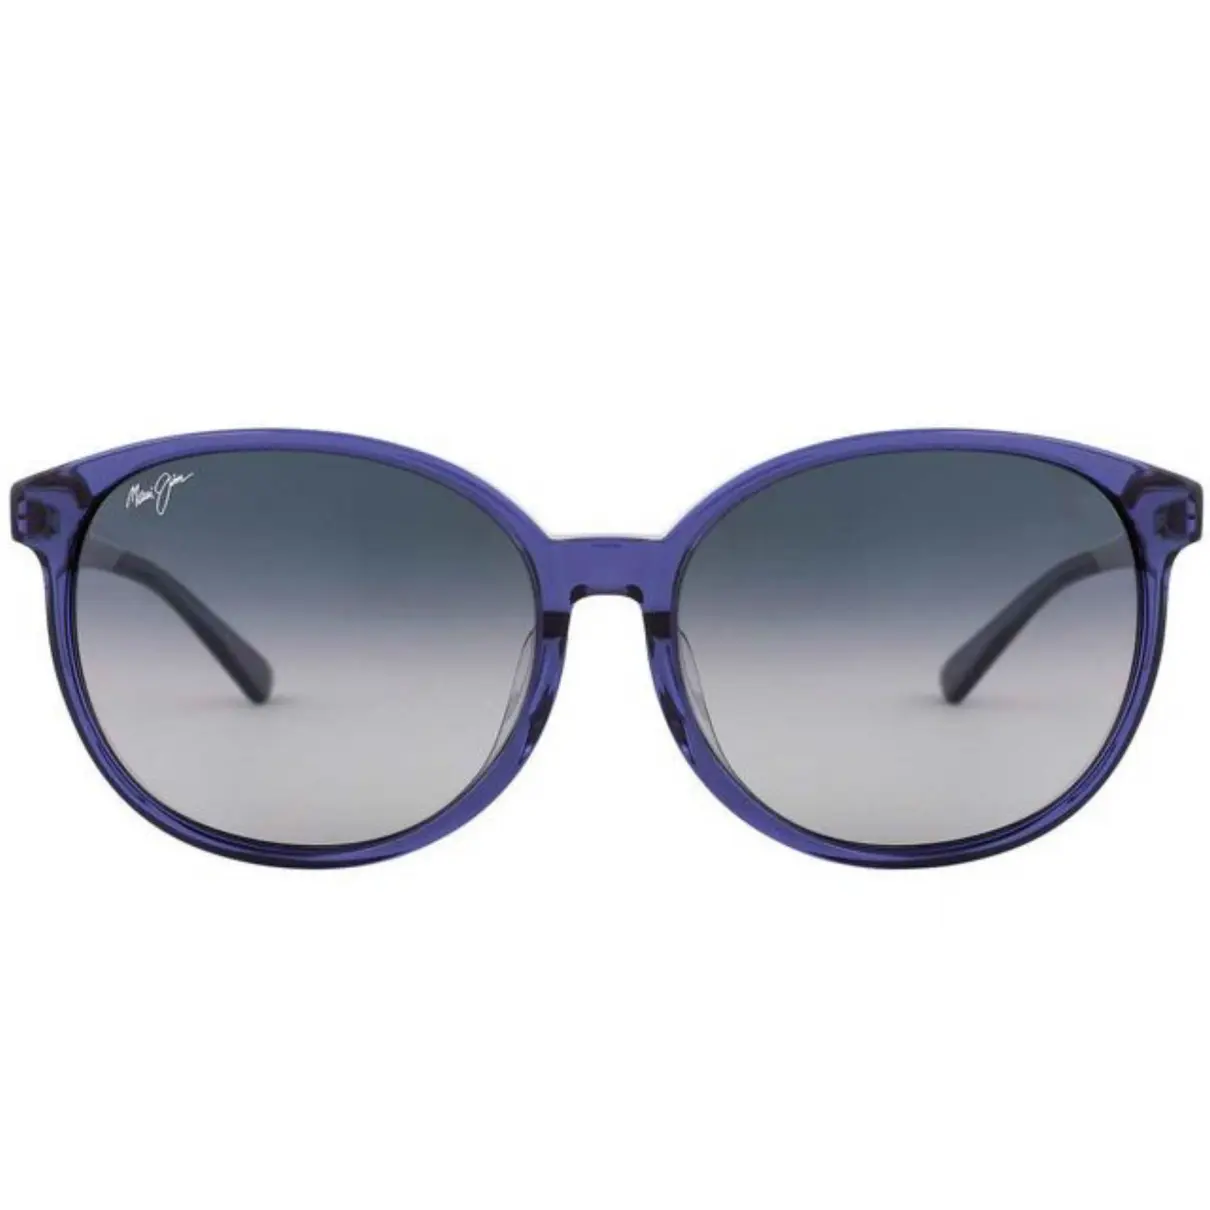 Buy Maui Jim Sunglasses online